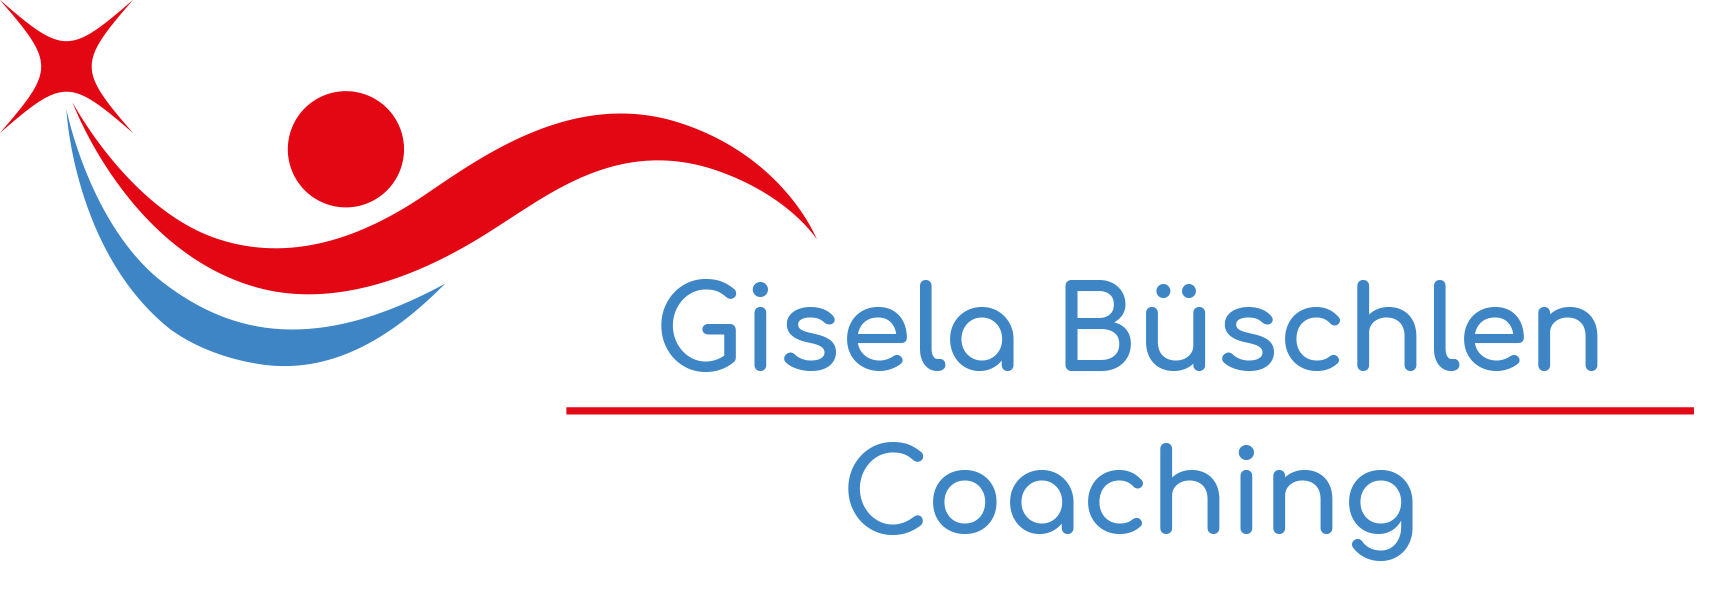 Gisela Büschlen Coaching